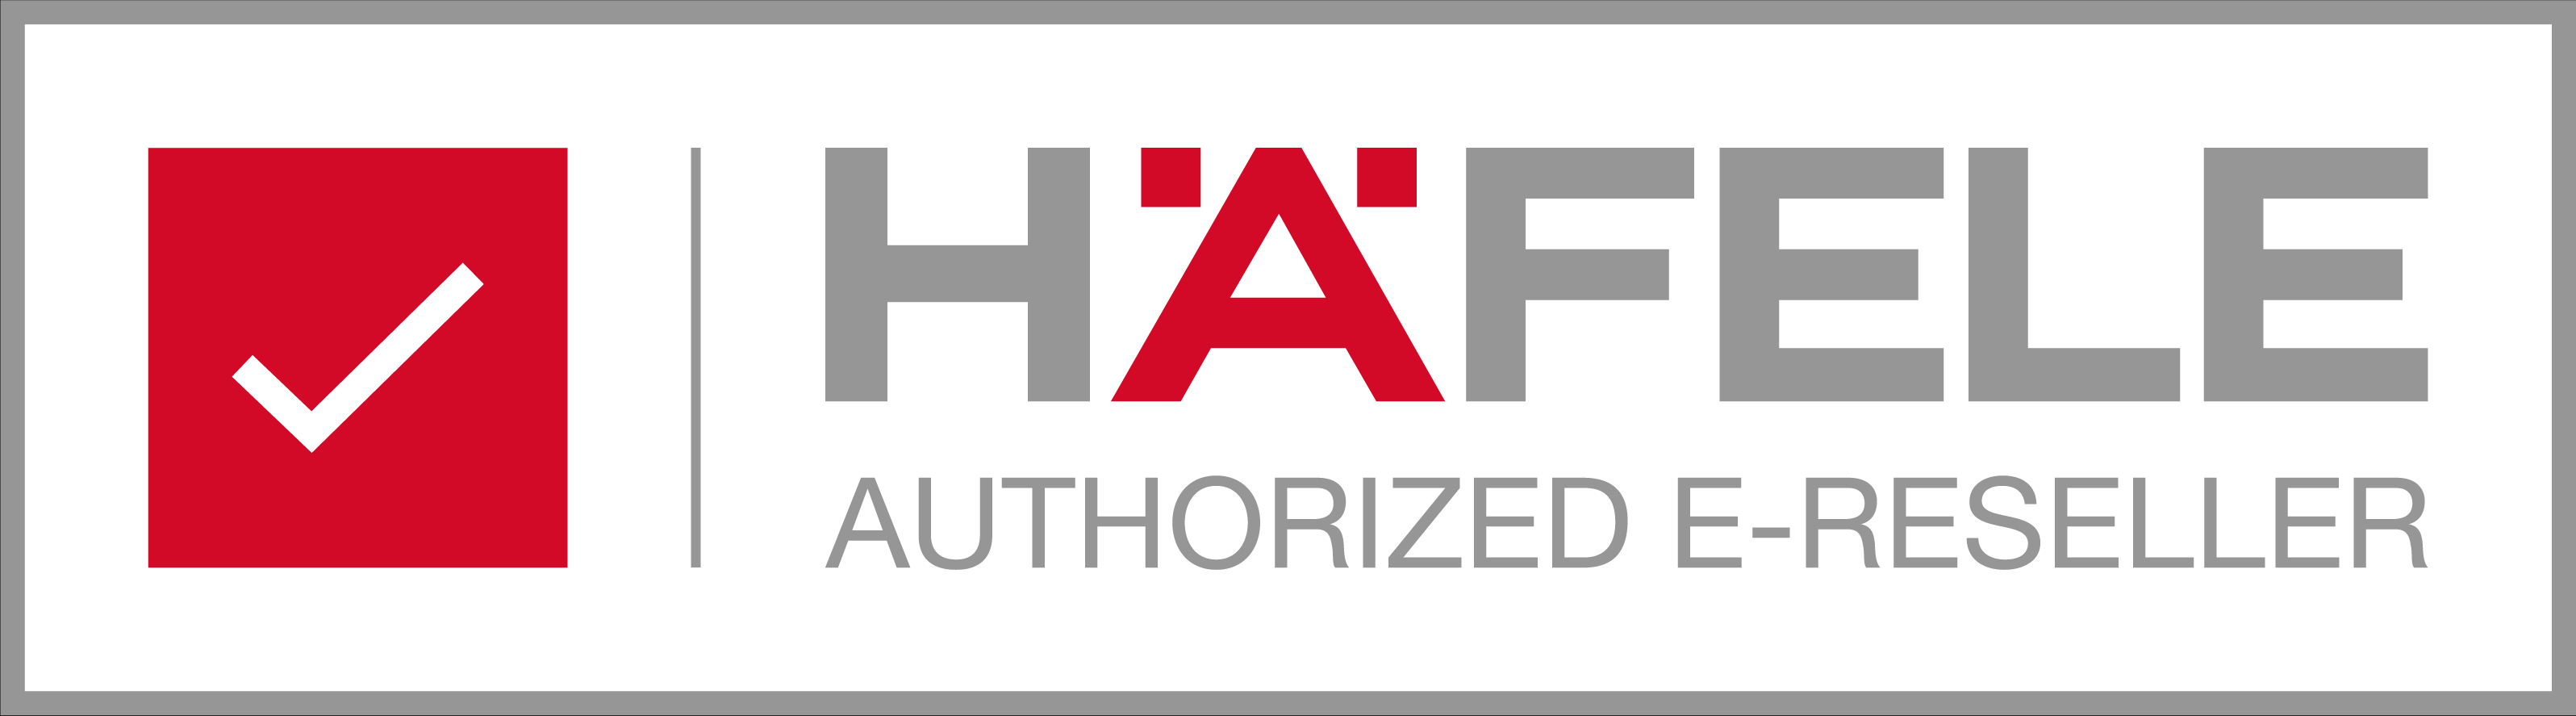 Häfele - Authorized E-Reseller